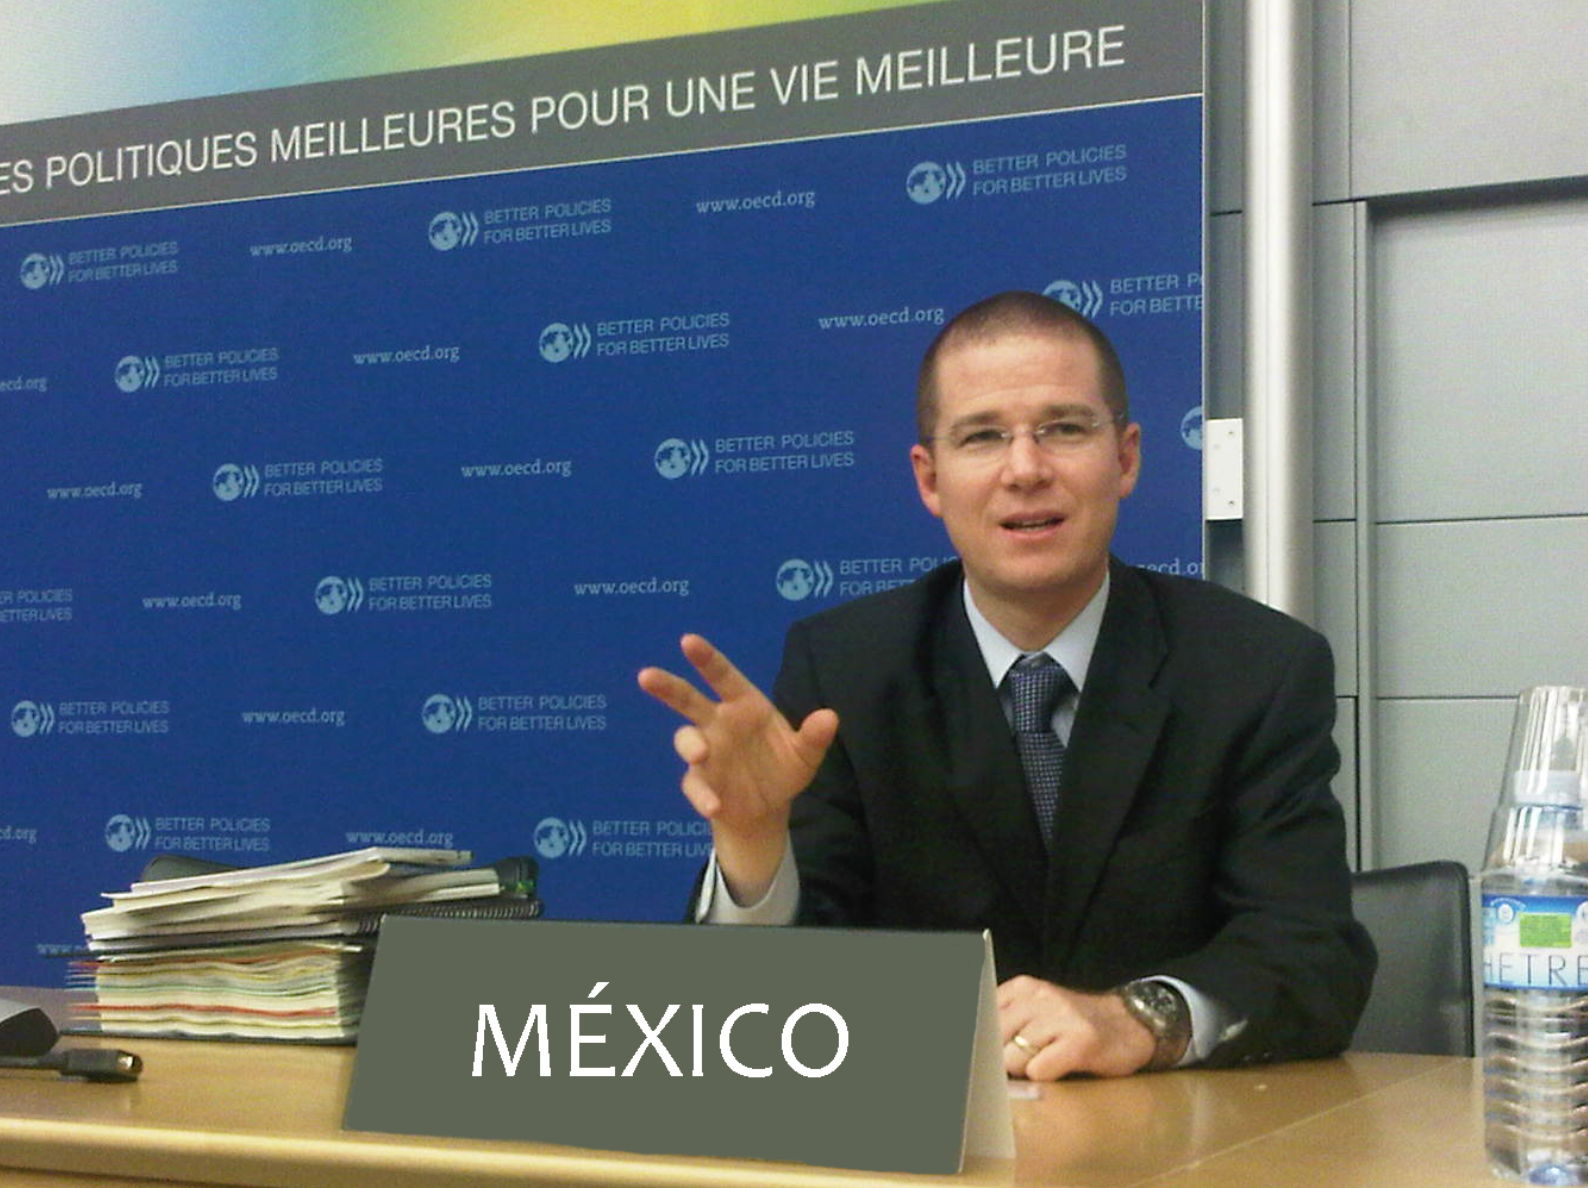 Ricardo Anaya was participating in the OCDE. Image credit: Wikicommons/Gvega78